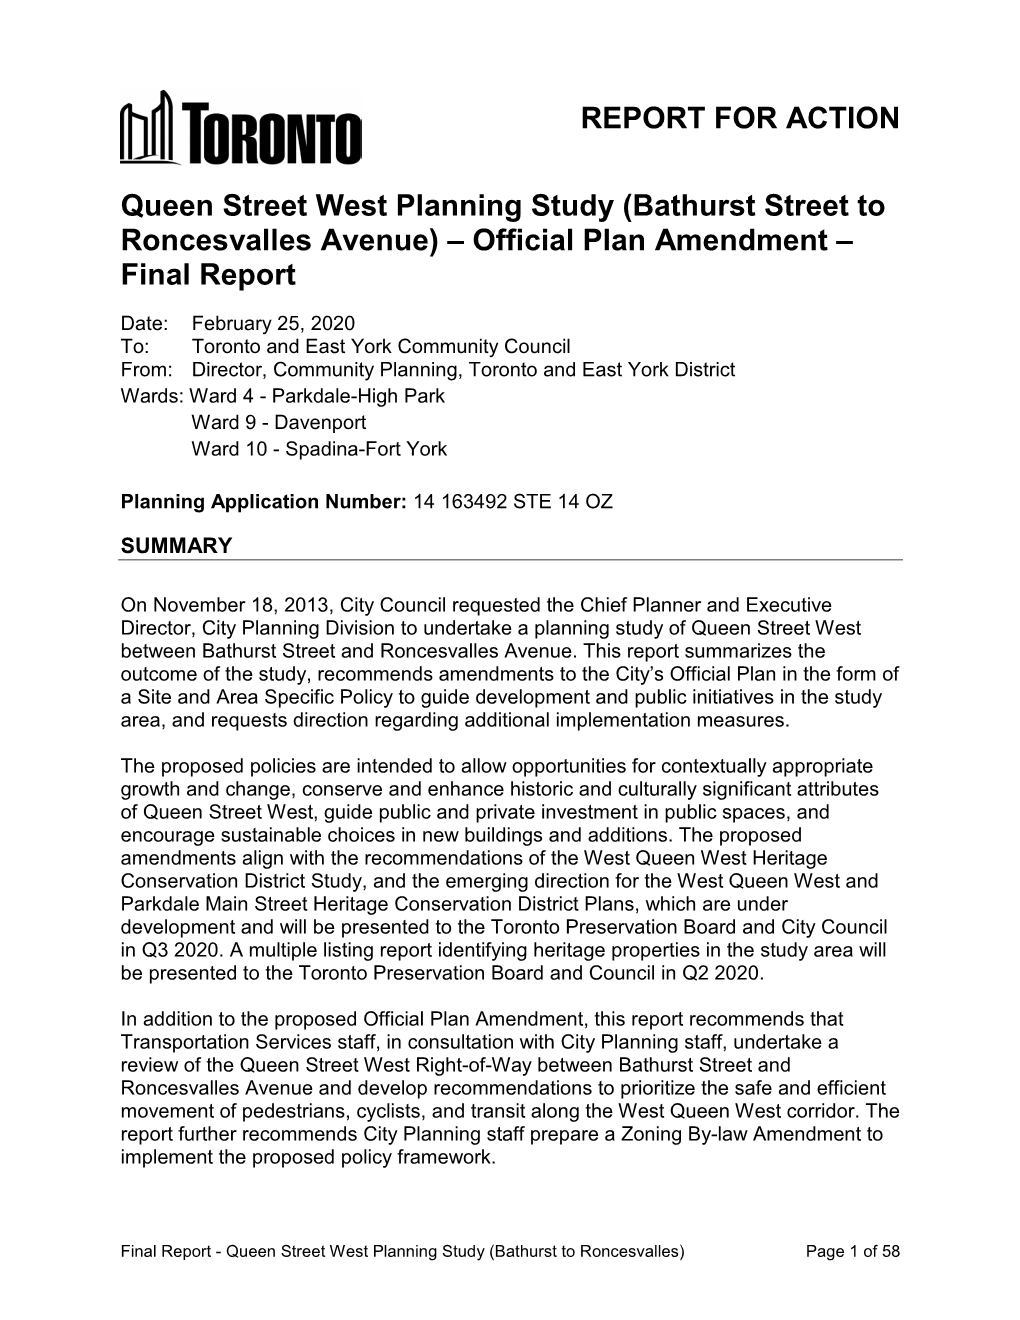 Queen Street West Planning Study (Bathurst Street to Roncesvalles Avenue) – Official Plan Amendment – Final Report